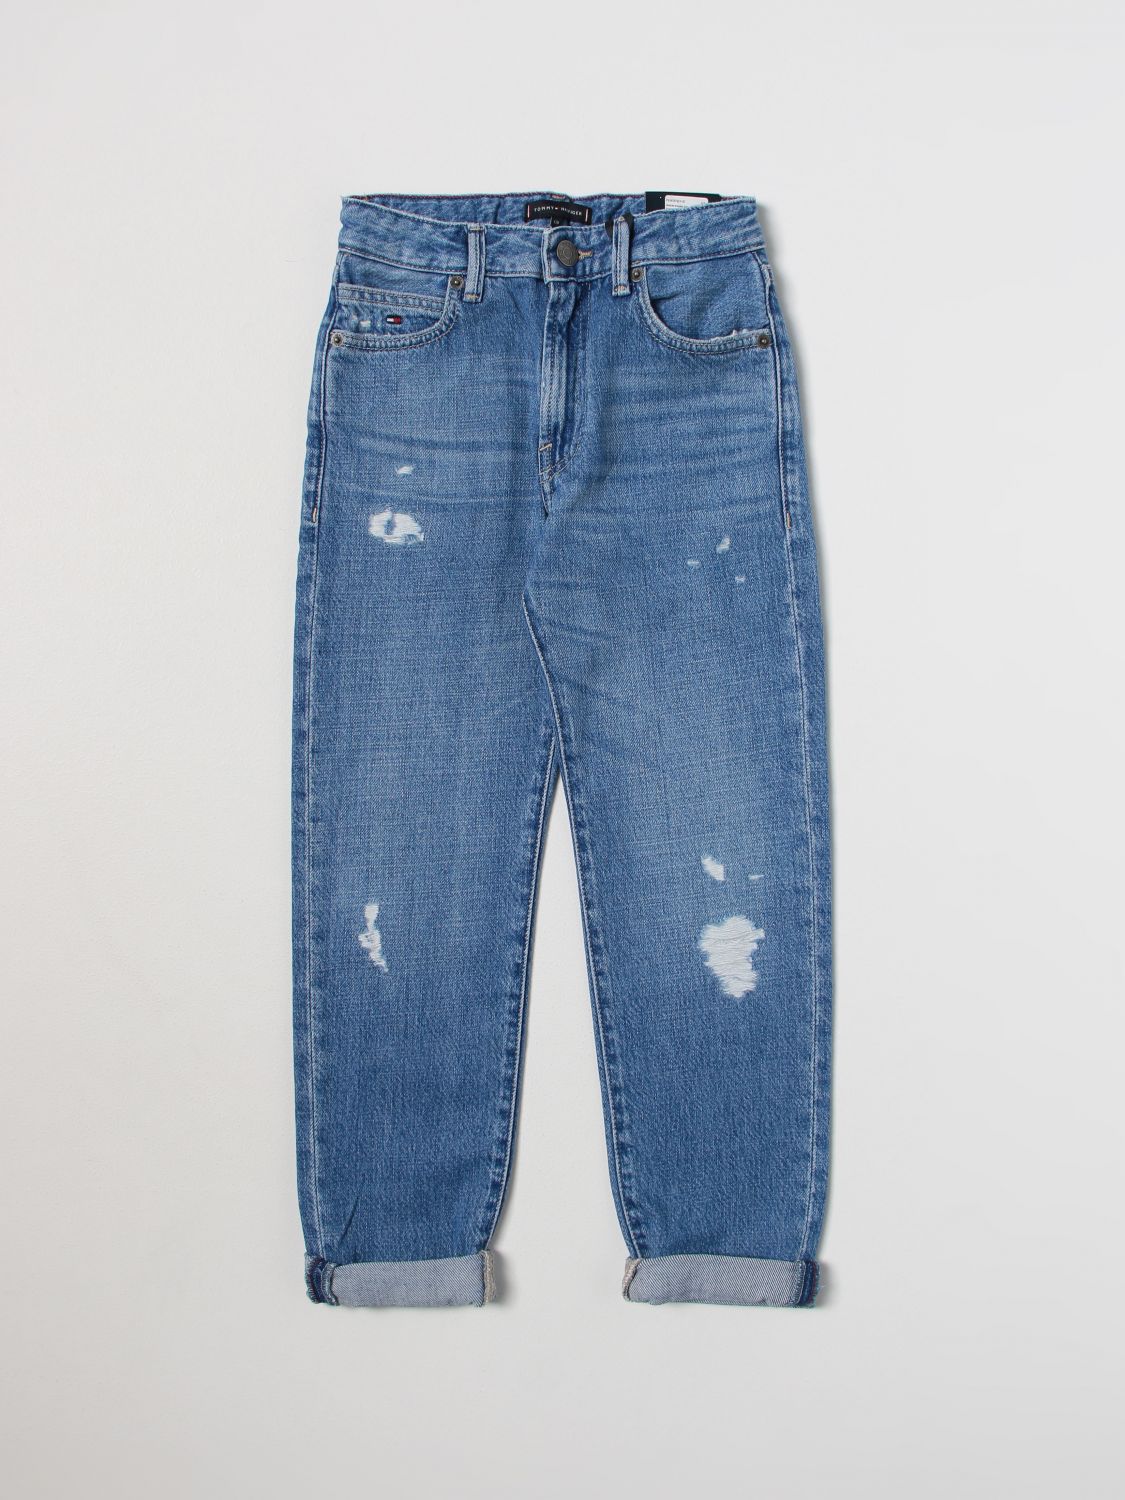 Foto Verleiden Vijfde TOMMY HILFIGER: jeans for boys - Denim | Tommy Hilfiger jeans KB0KB07924  online on GIGLIO.COM